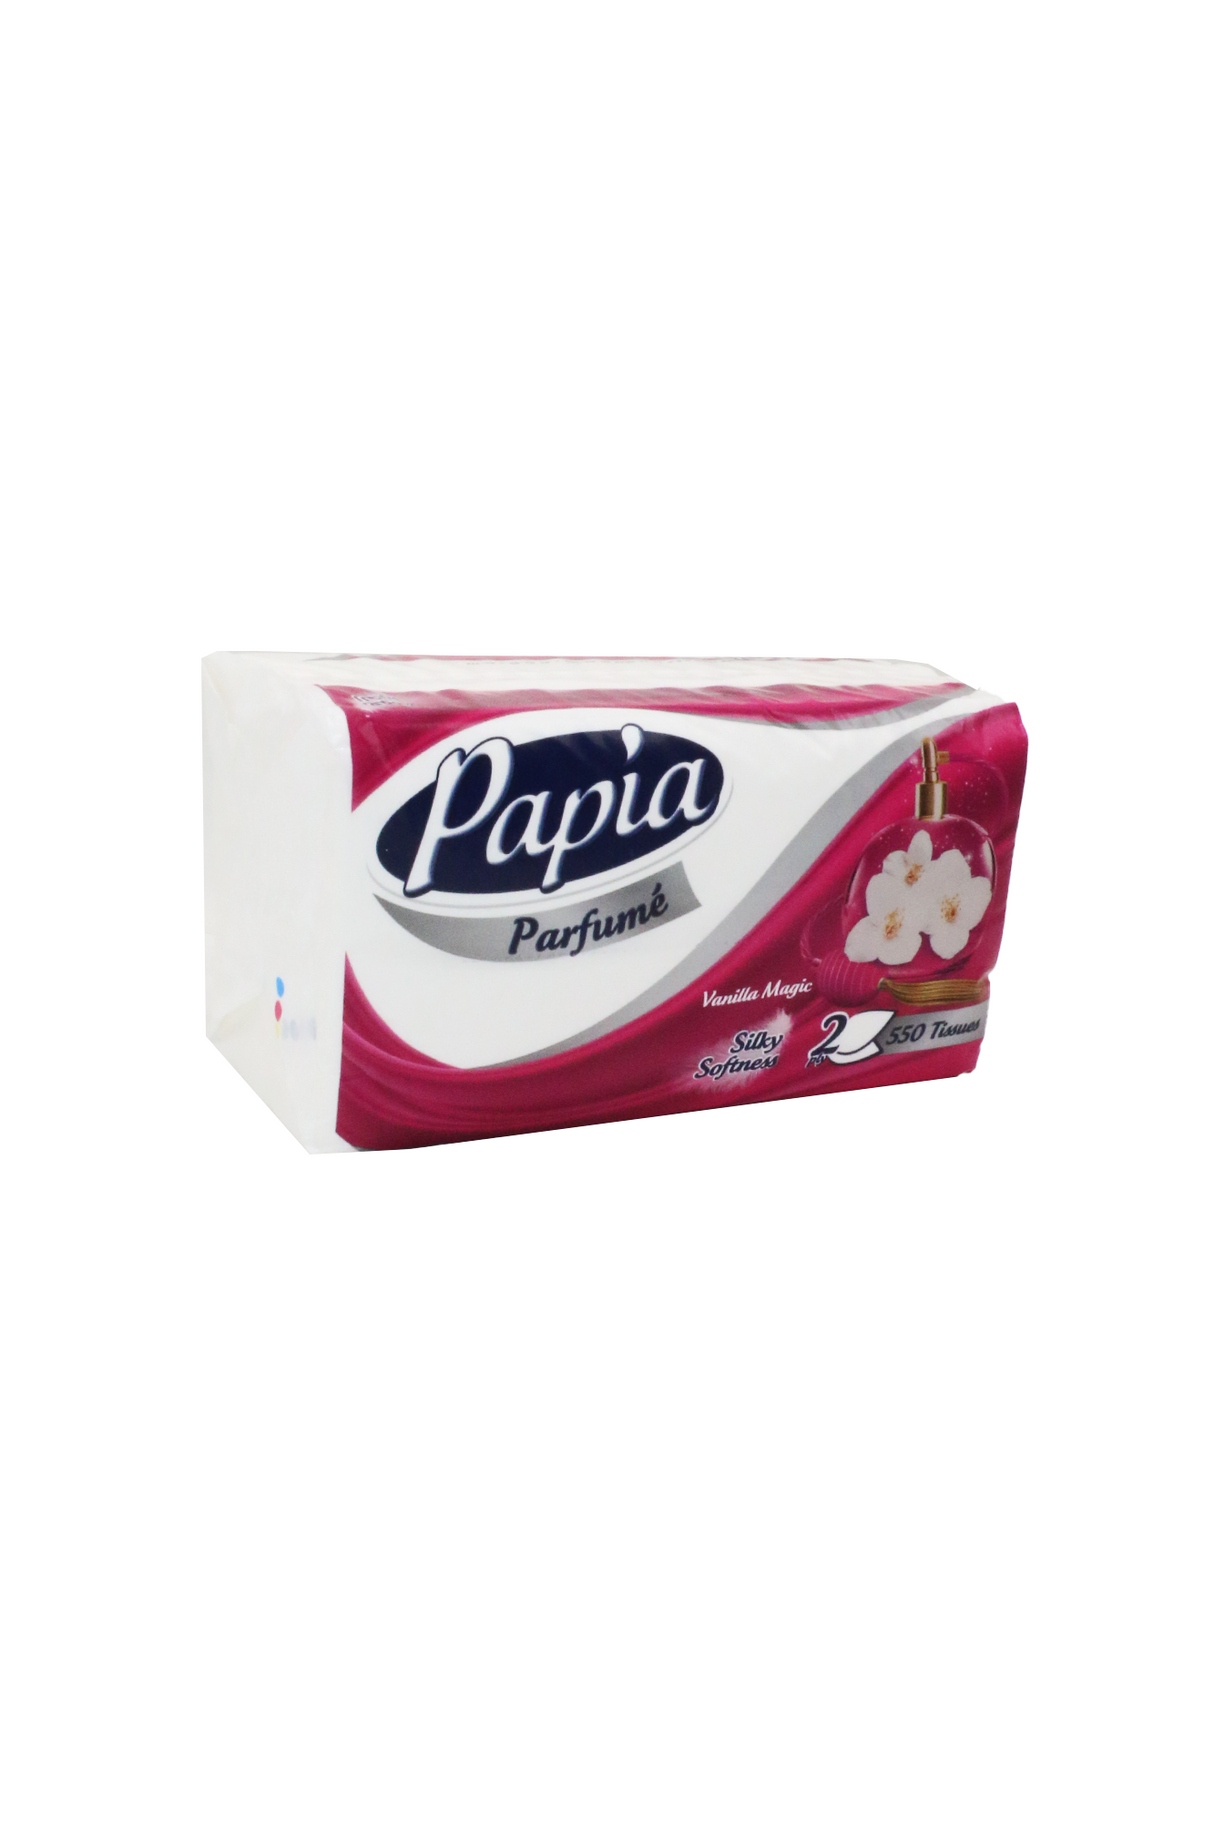 papia tissue paper perfume 500pc